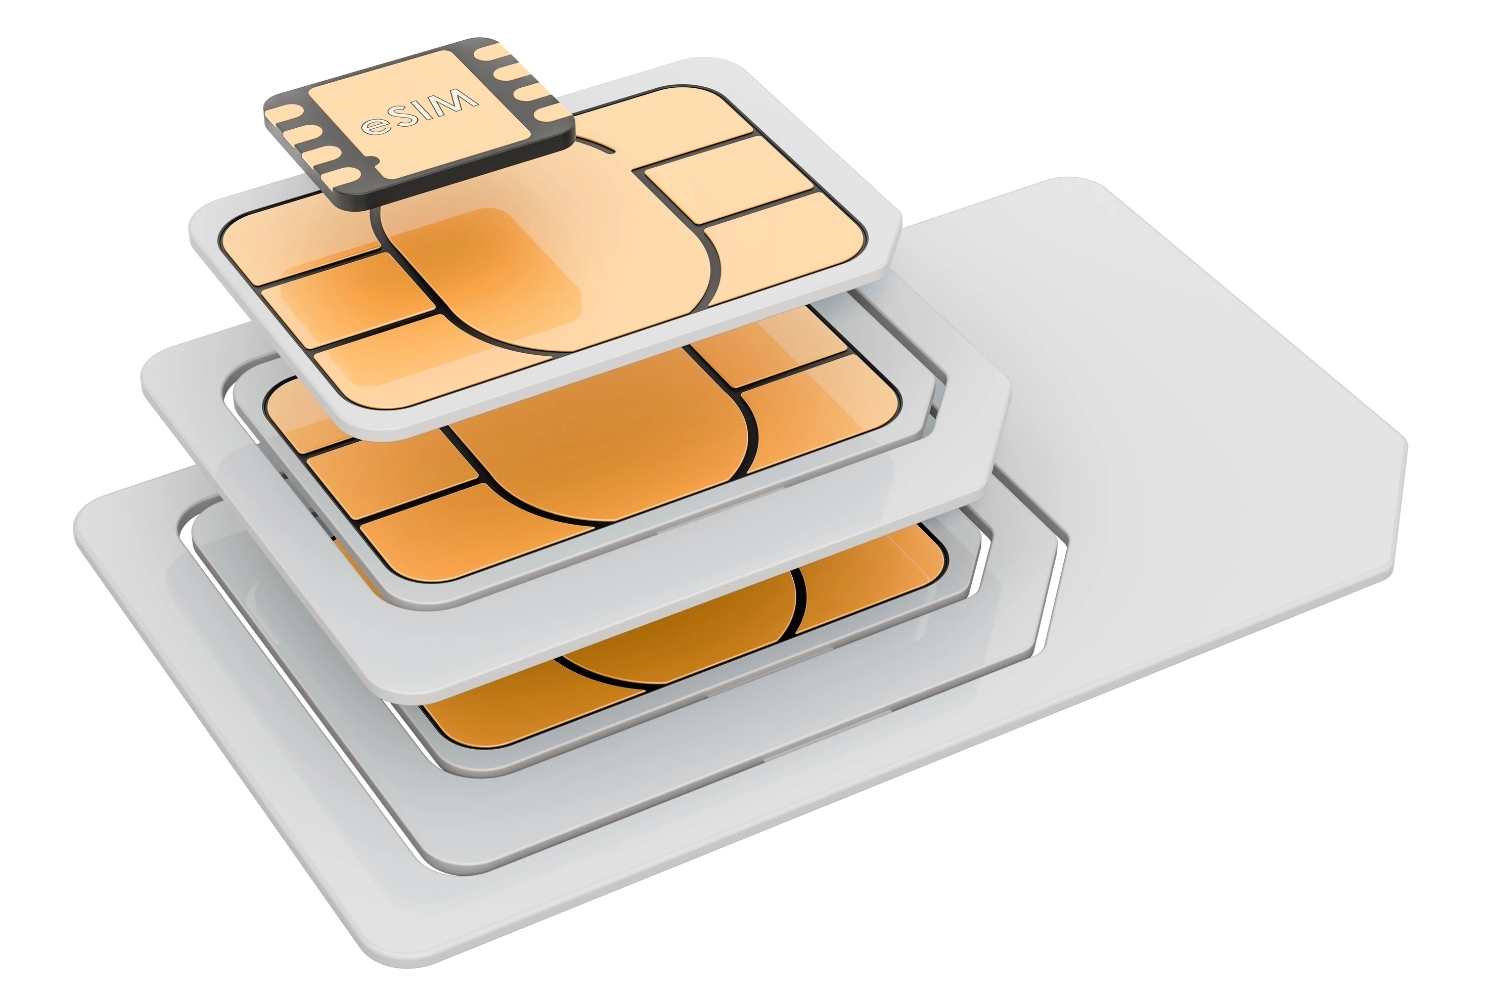 Understanding What A SIM Card Is